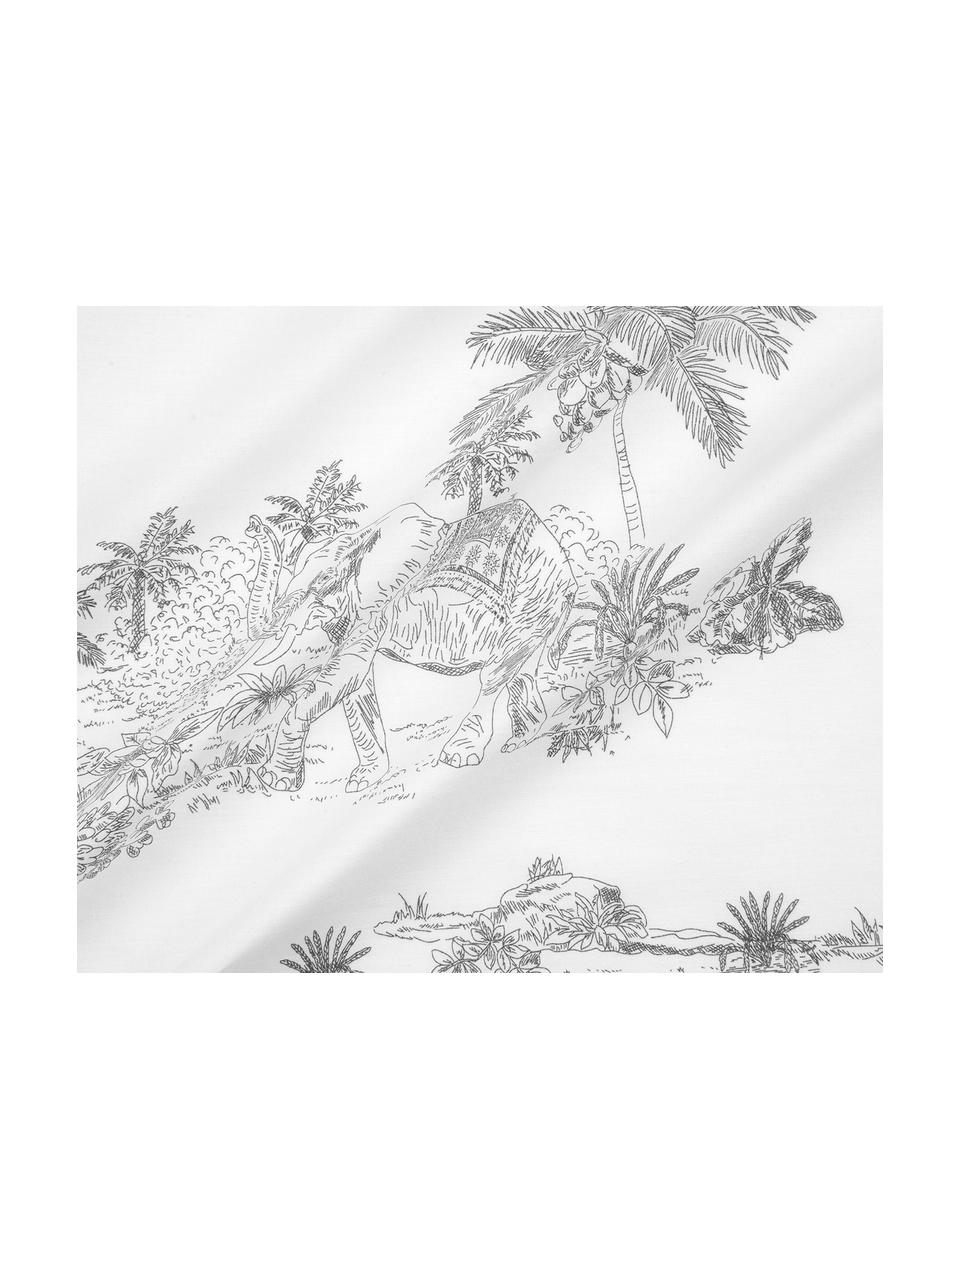 Baumwollperkal-Bettwäsche Bali mit gezeichneten Palmenmotiven, Webart: Perkal Fadendichte 180 TC, Weiß, Grau, 240 x 220 cm + 2 Kissen 80 x 80 cm